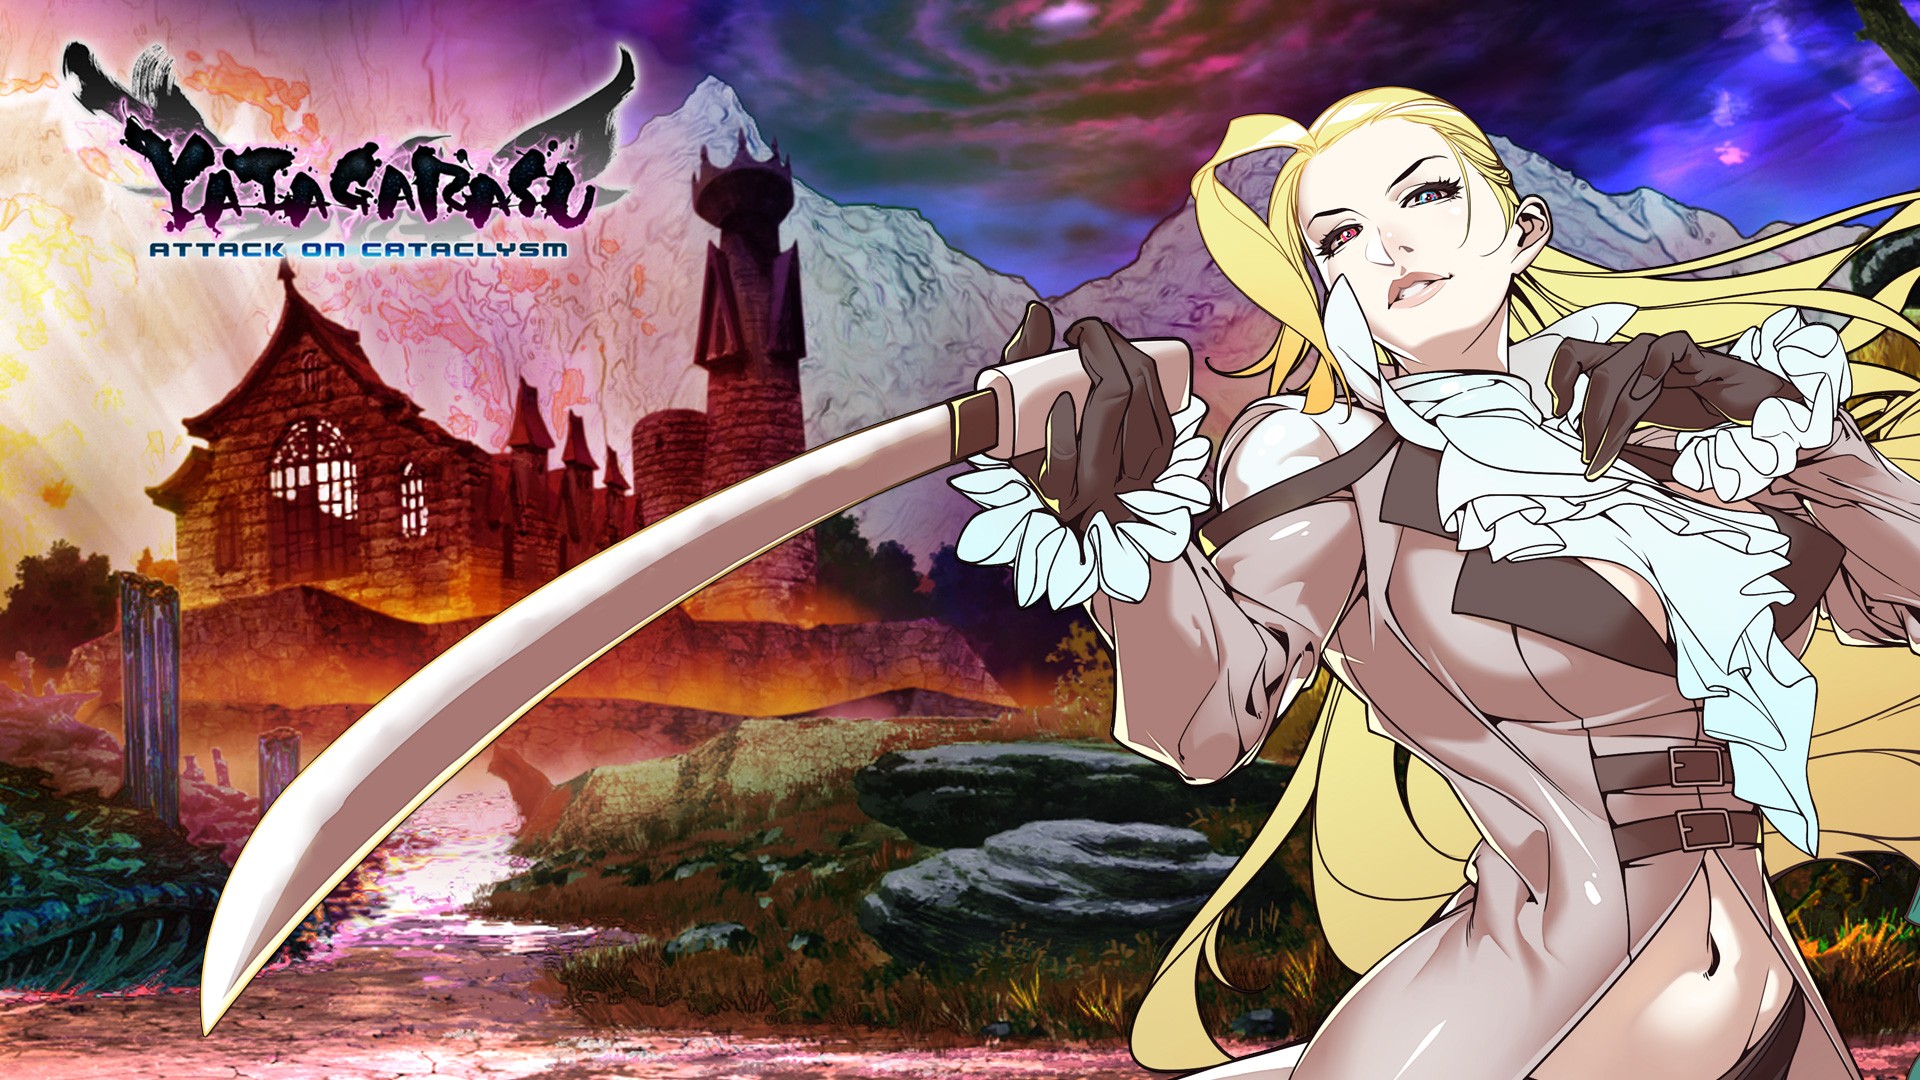 Anime 1920x1080 anime Yatagarasu: Attack on Cataclysm anime girls 2014 (Year) blonde sword long hair women with swords weapon